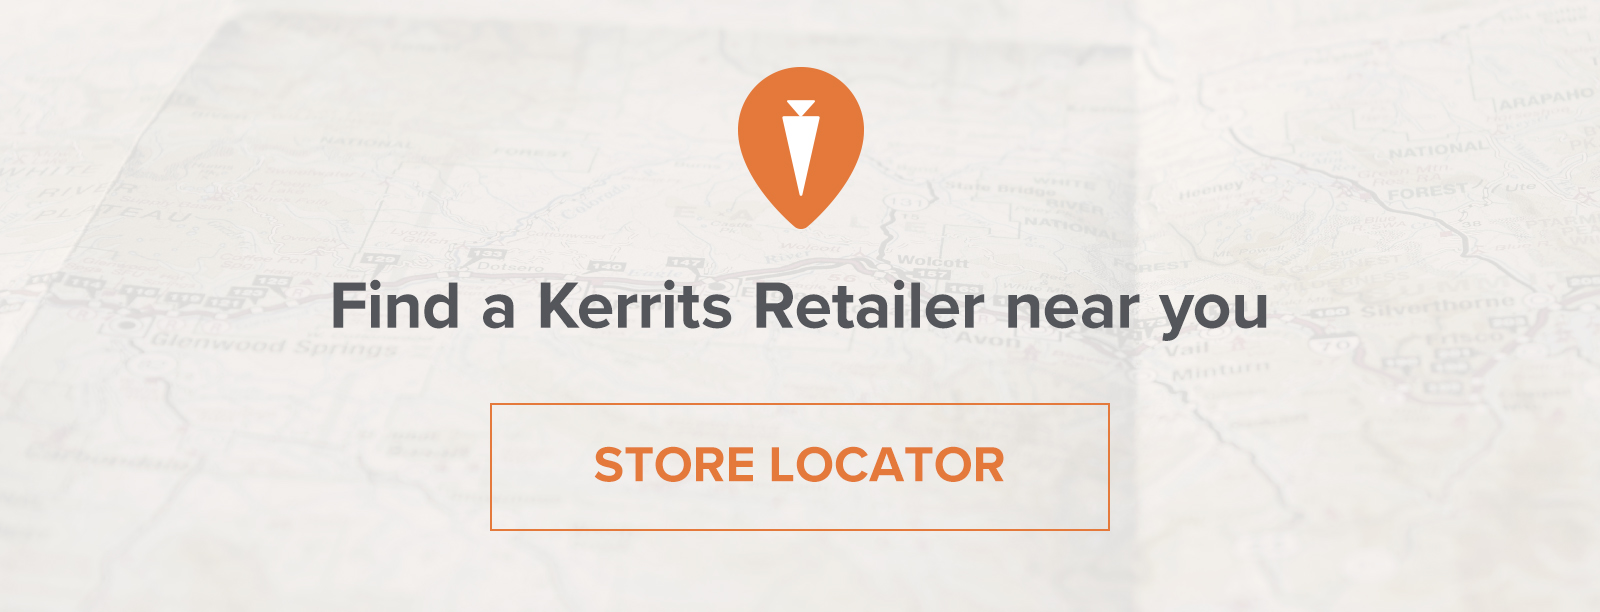 Store Locator: Find a Kerrits Retailer Near You